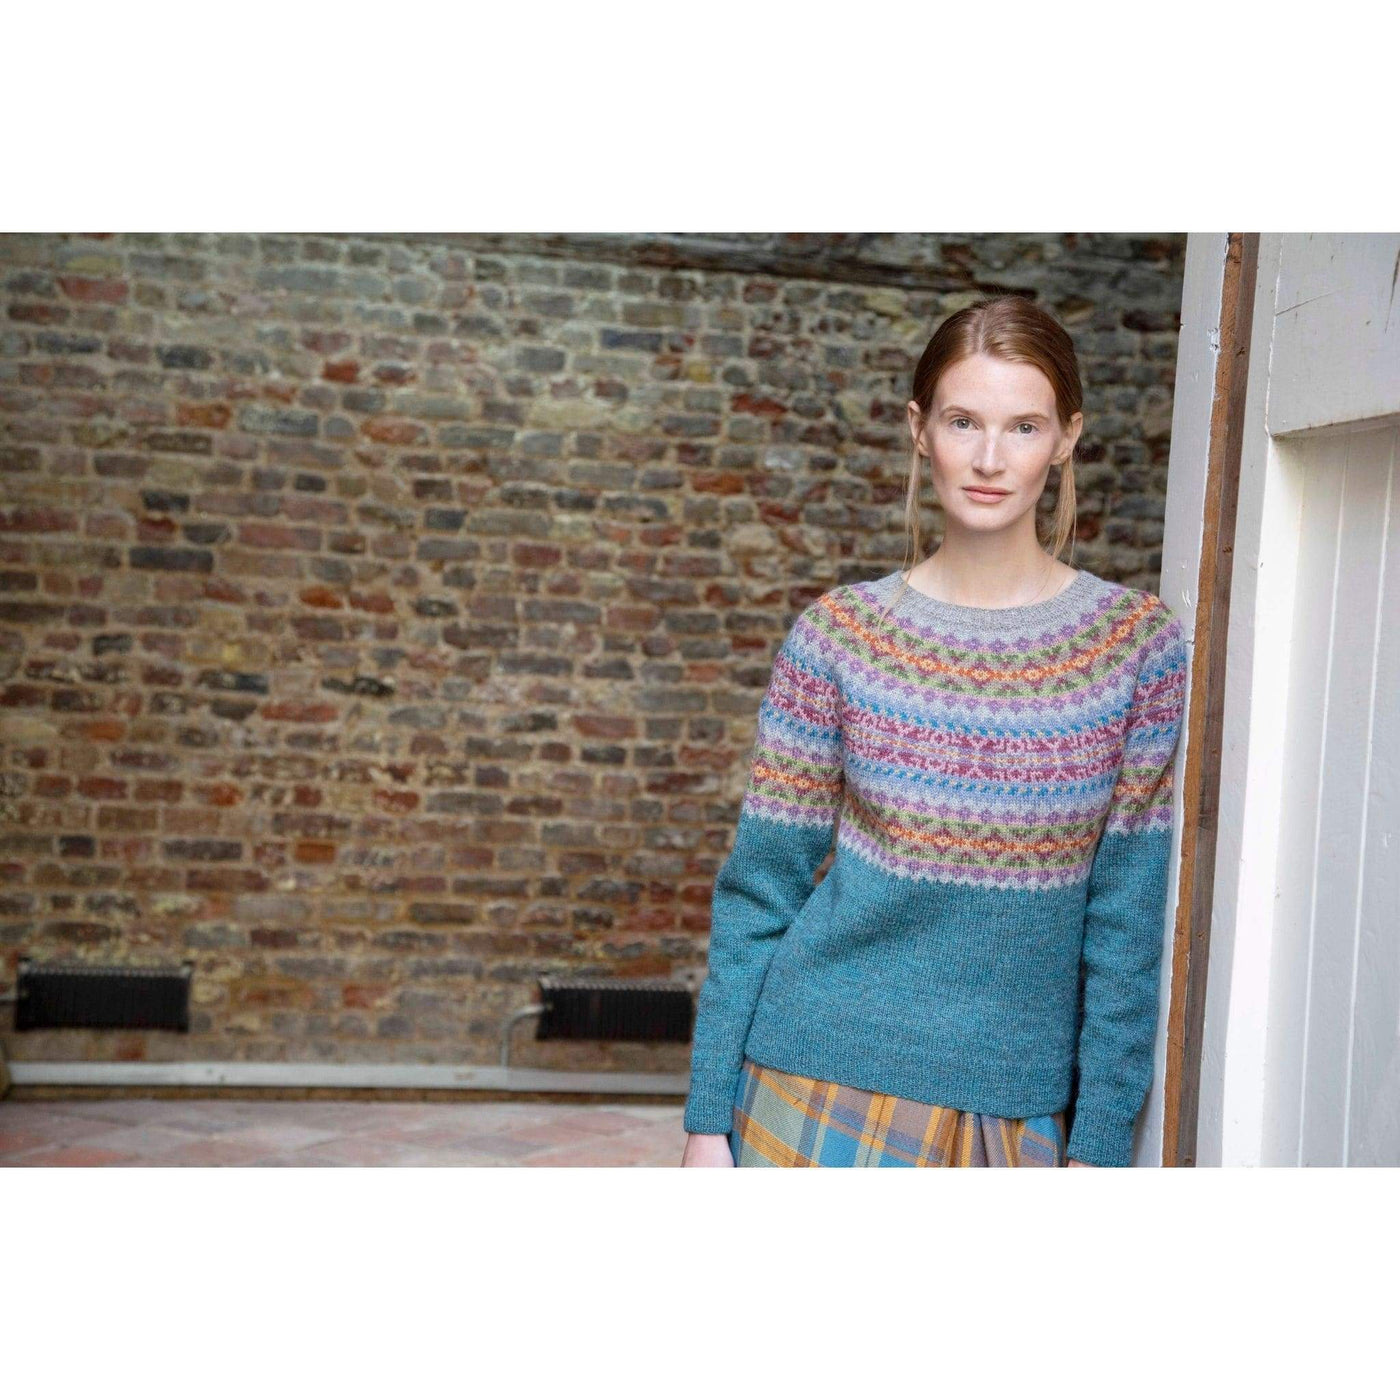 The Woolly Thistle Dana Yarn Set in Marie Wallin's British Breeds from CHERISH featuring woman wearing Dana sweater